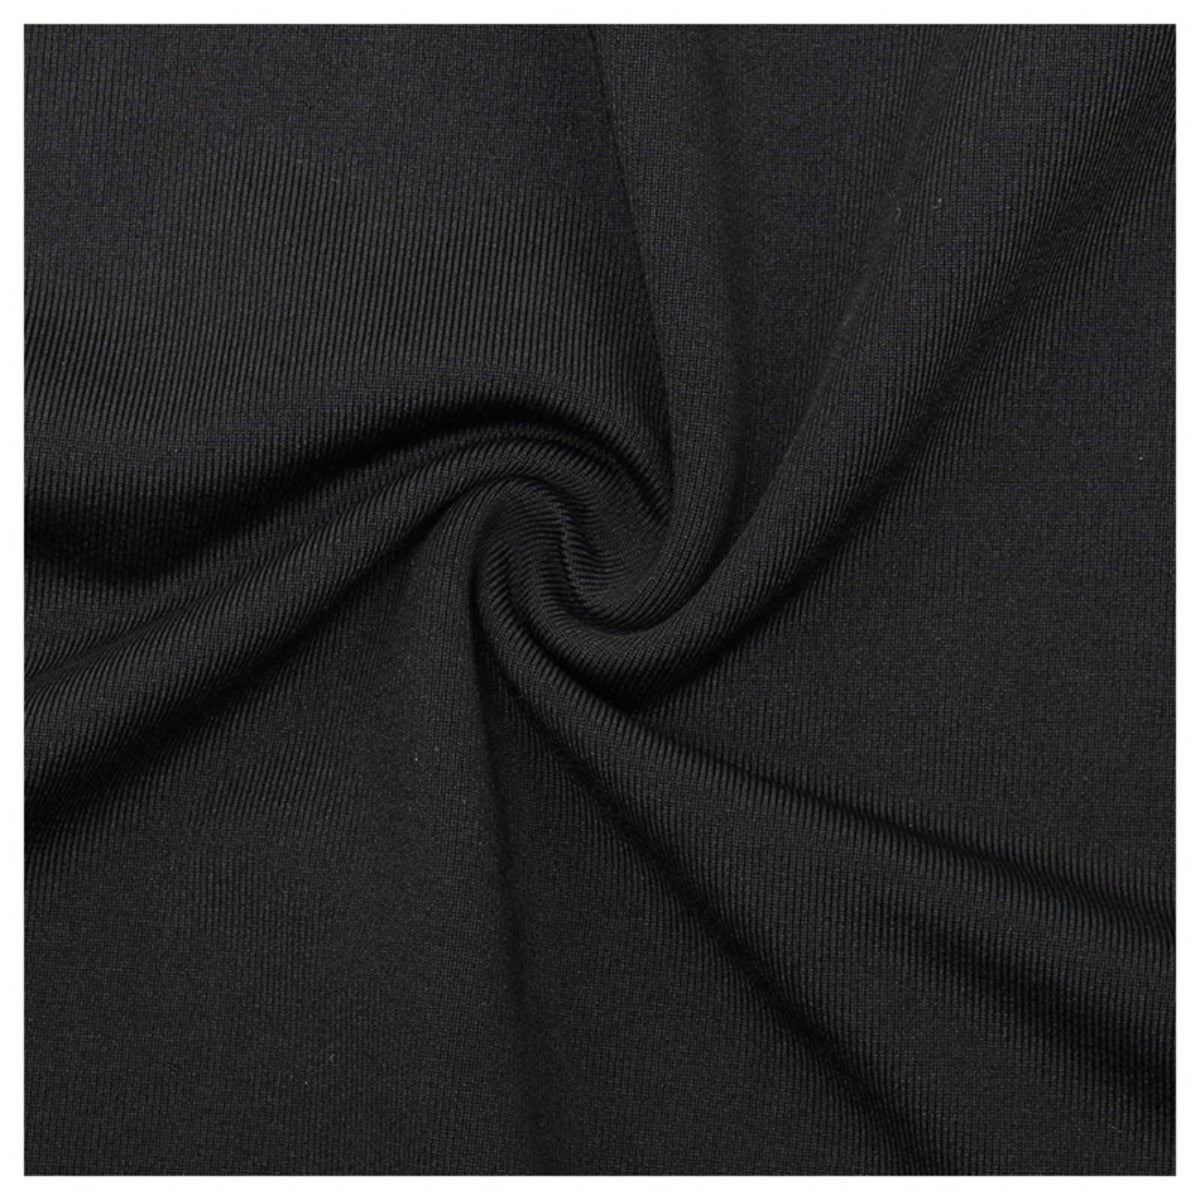 Men's Quick Dry Thermal Underwear - Black w/Gray Lining